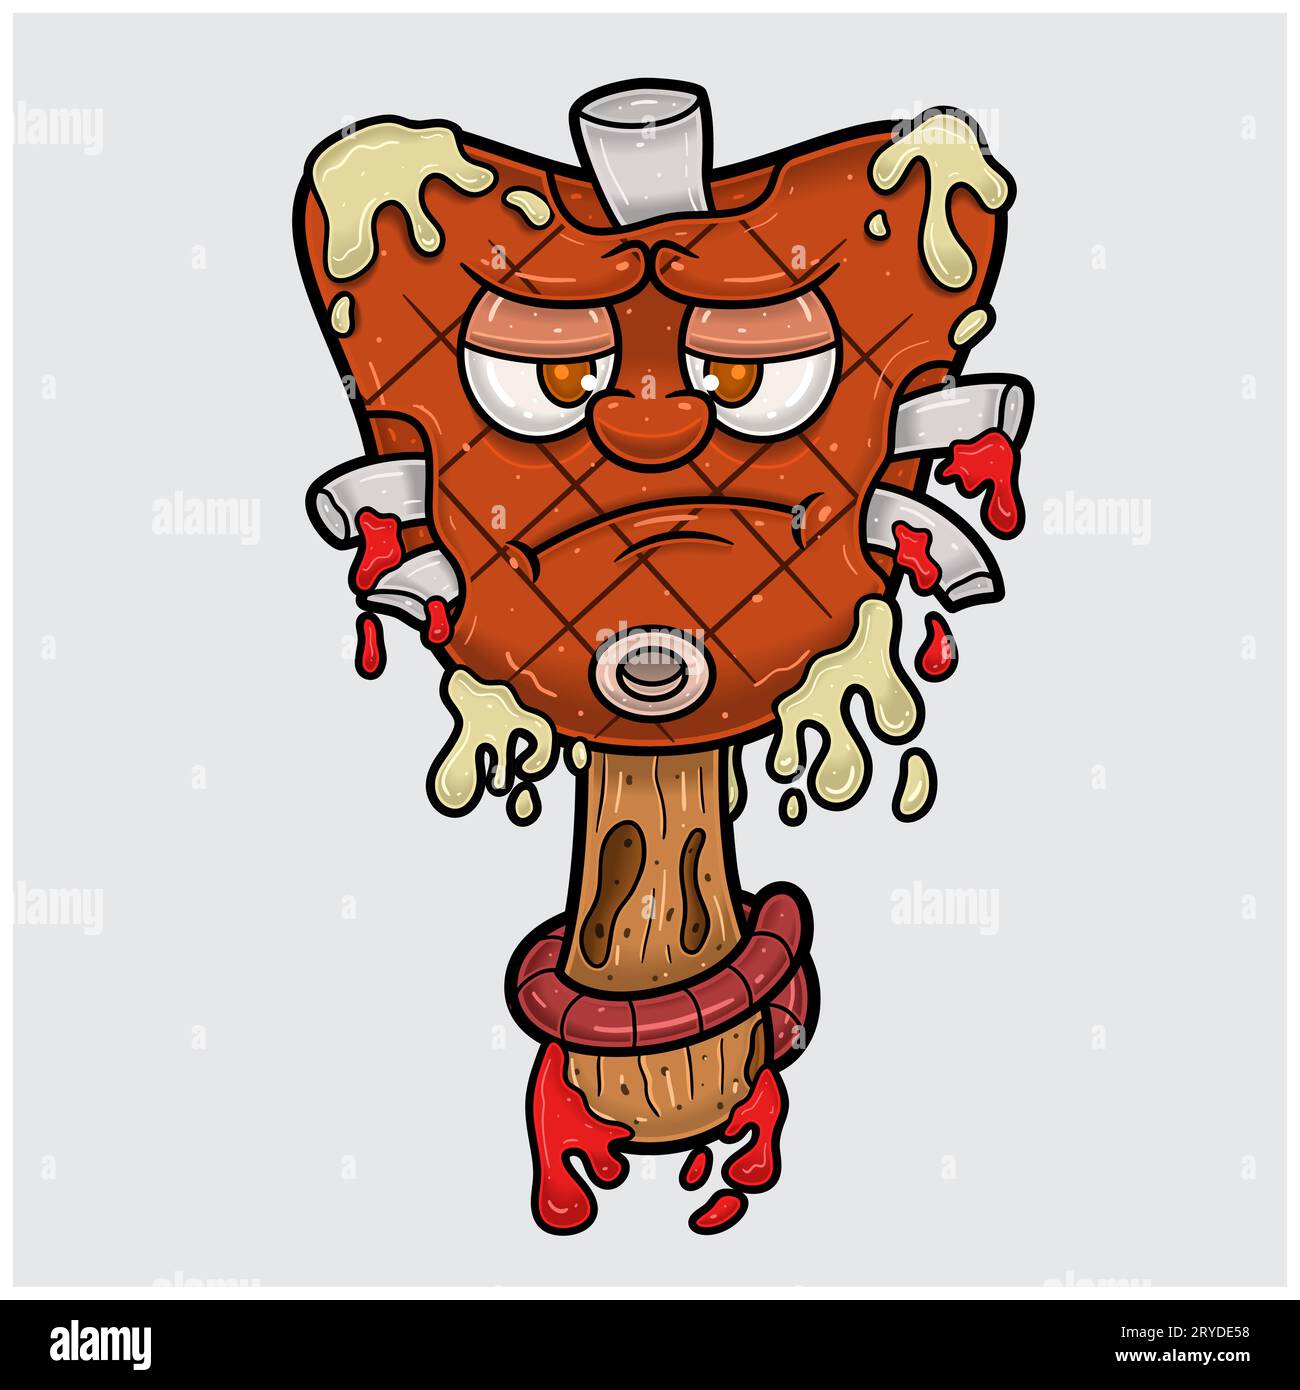 Mascot Cartoon of Ice Steak With Sad Face. Free Editable. Vectors Illustrations Stock Vector